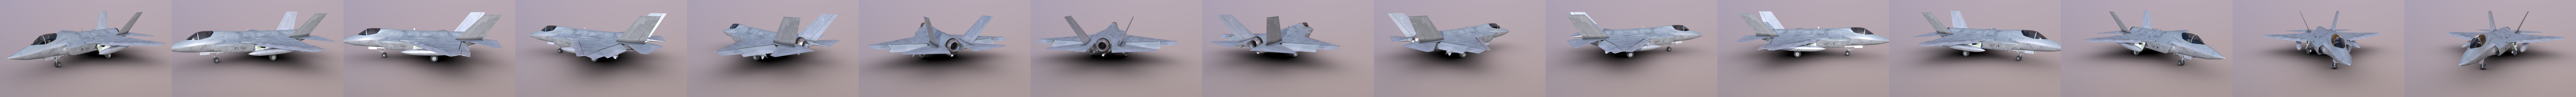 F-36C Spectre - 3D model by Lepico55 (@lepico) [c770125]